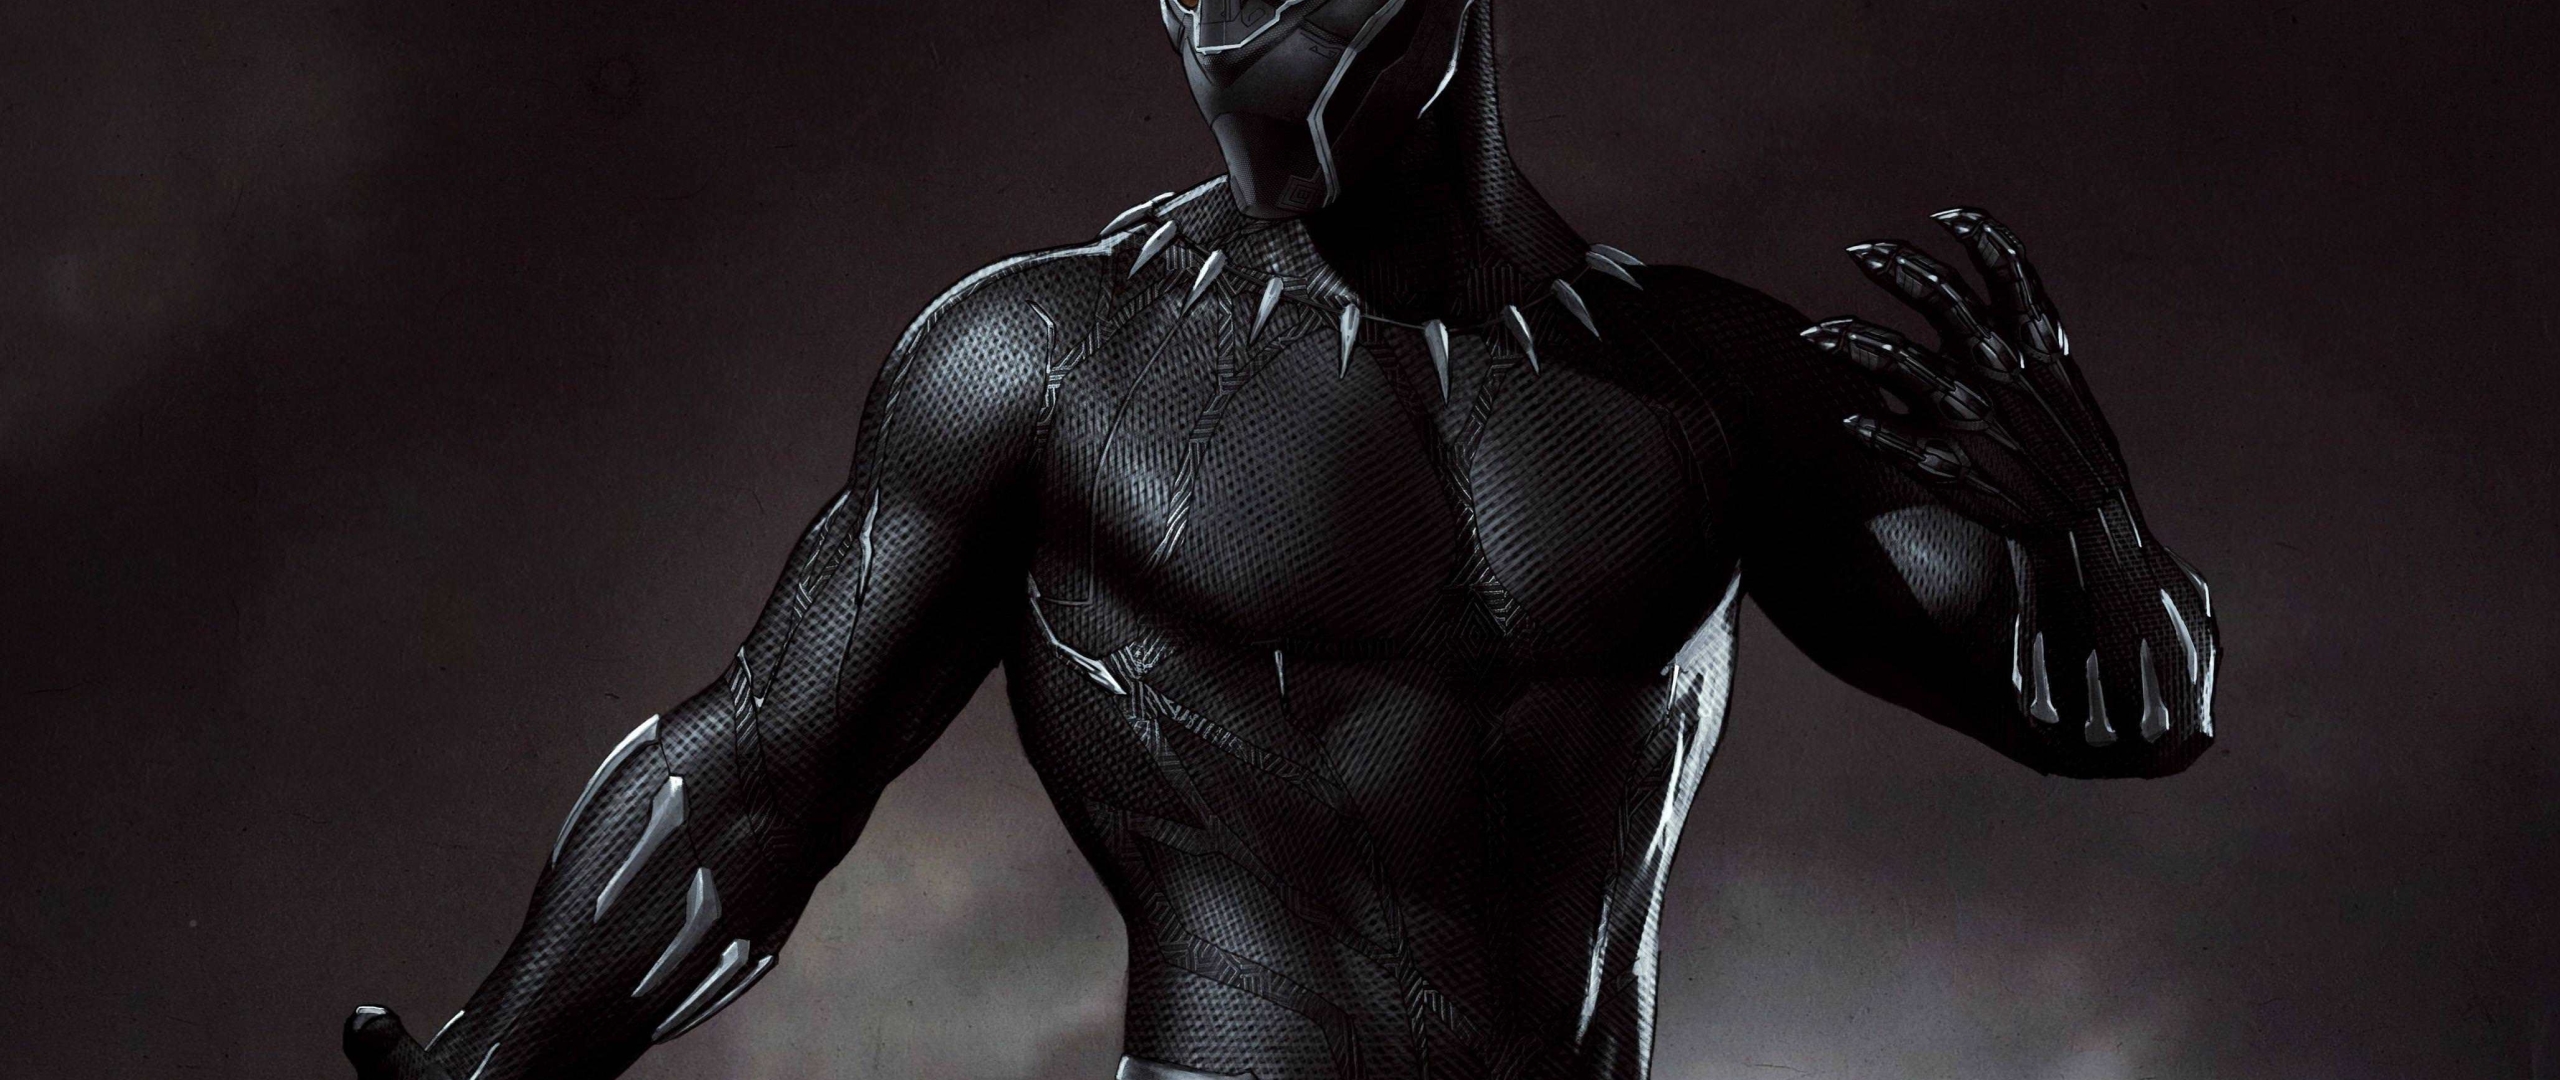 2560x1080 Marvel Black Panther Artwork 2560x1080 Resolution 